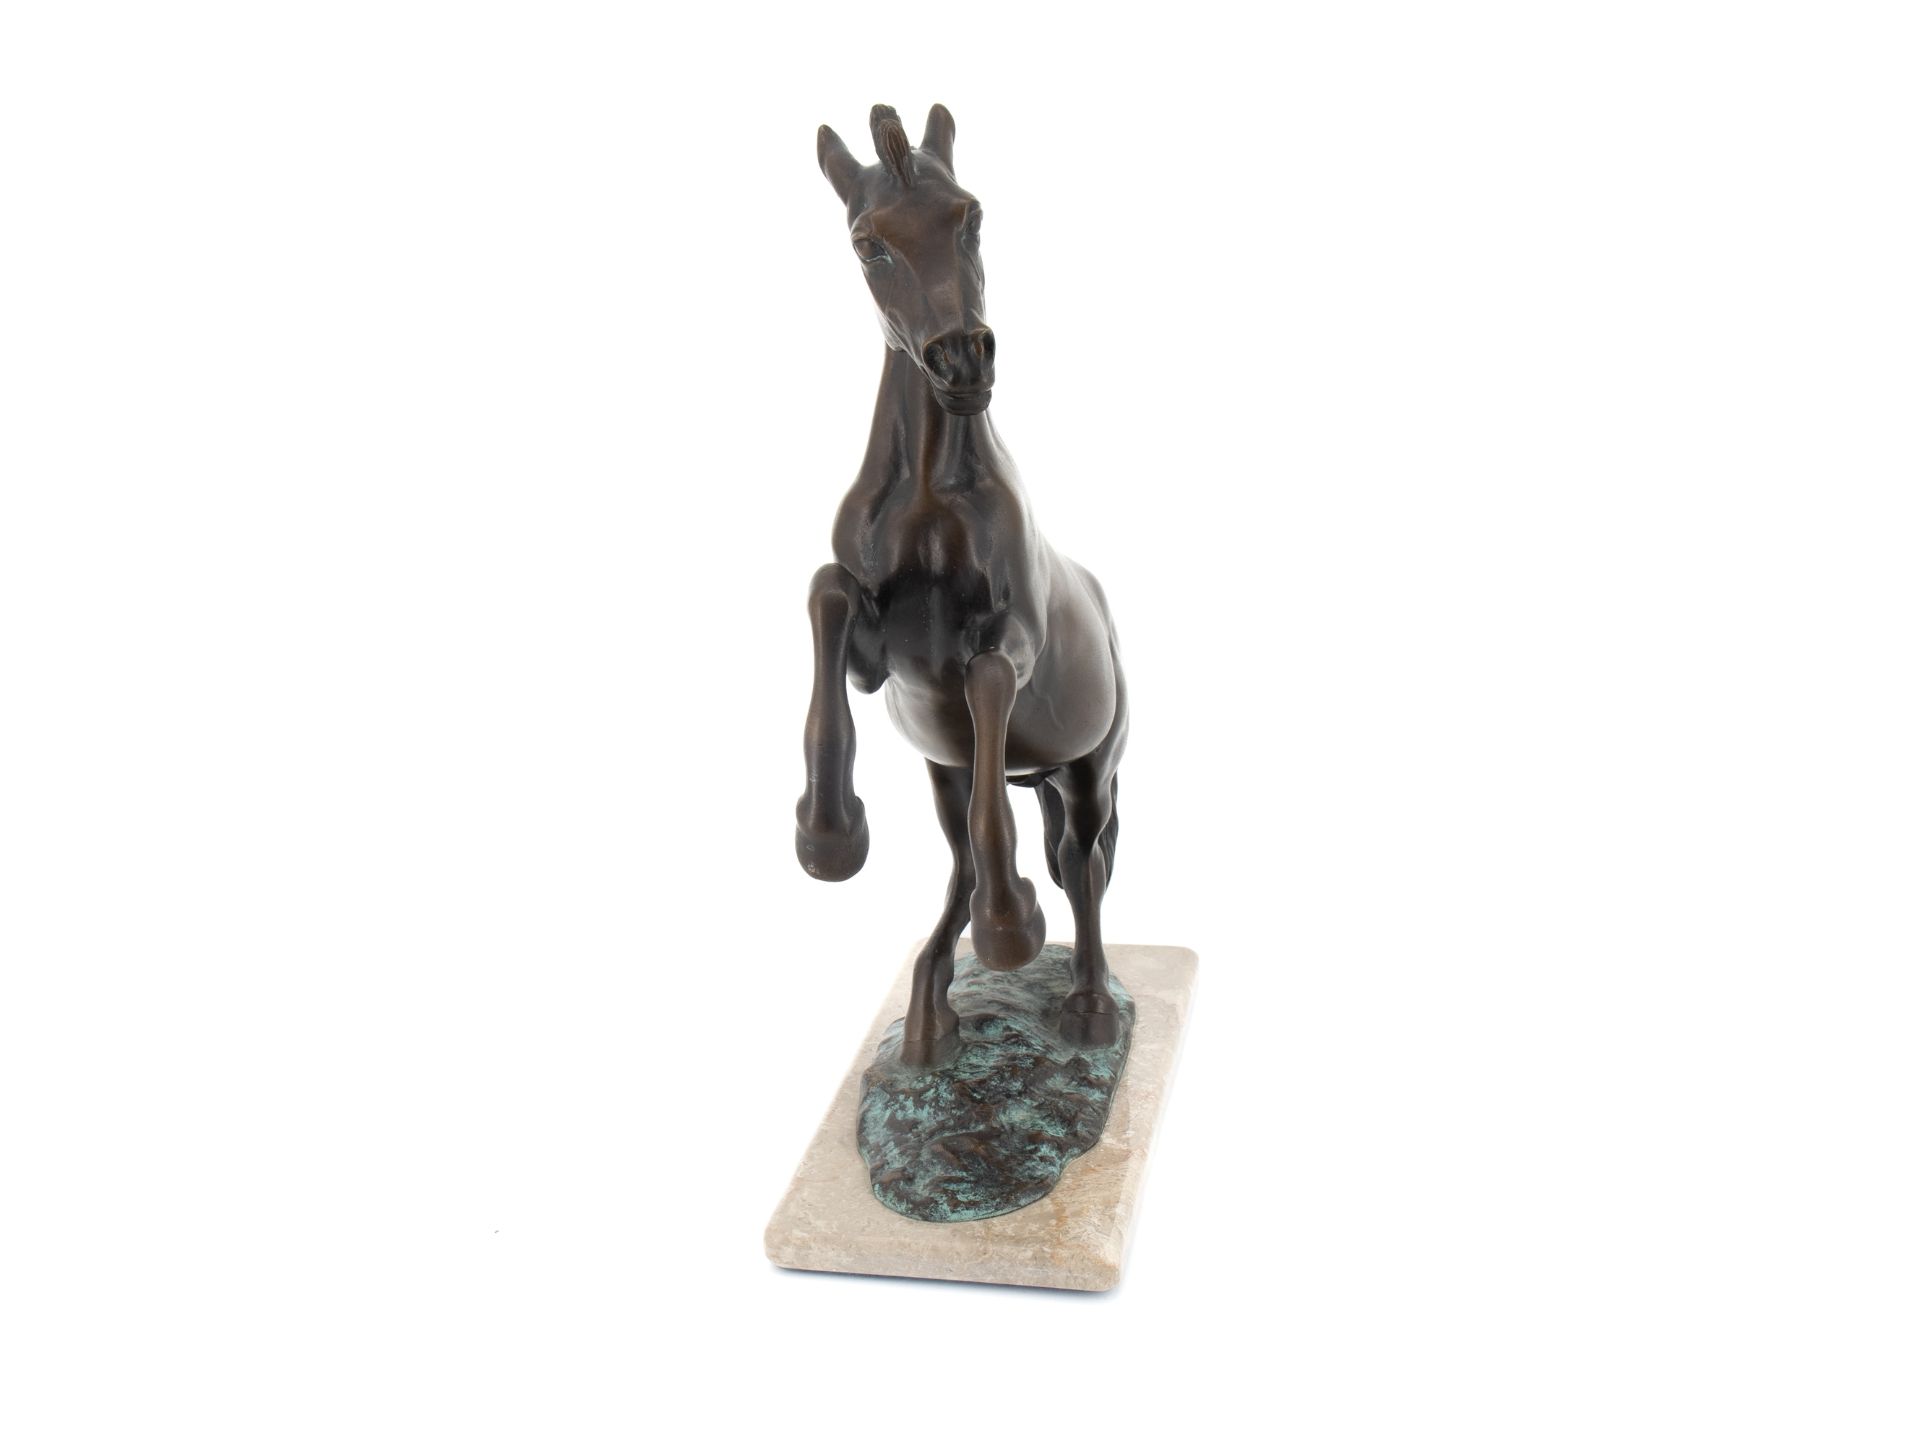 Diller Helmut (1911 - 1984), Bronze sculpture "Steigendes Pferd" (Rising Horse) - Image 2 of 9